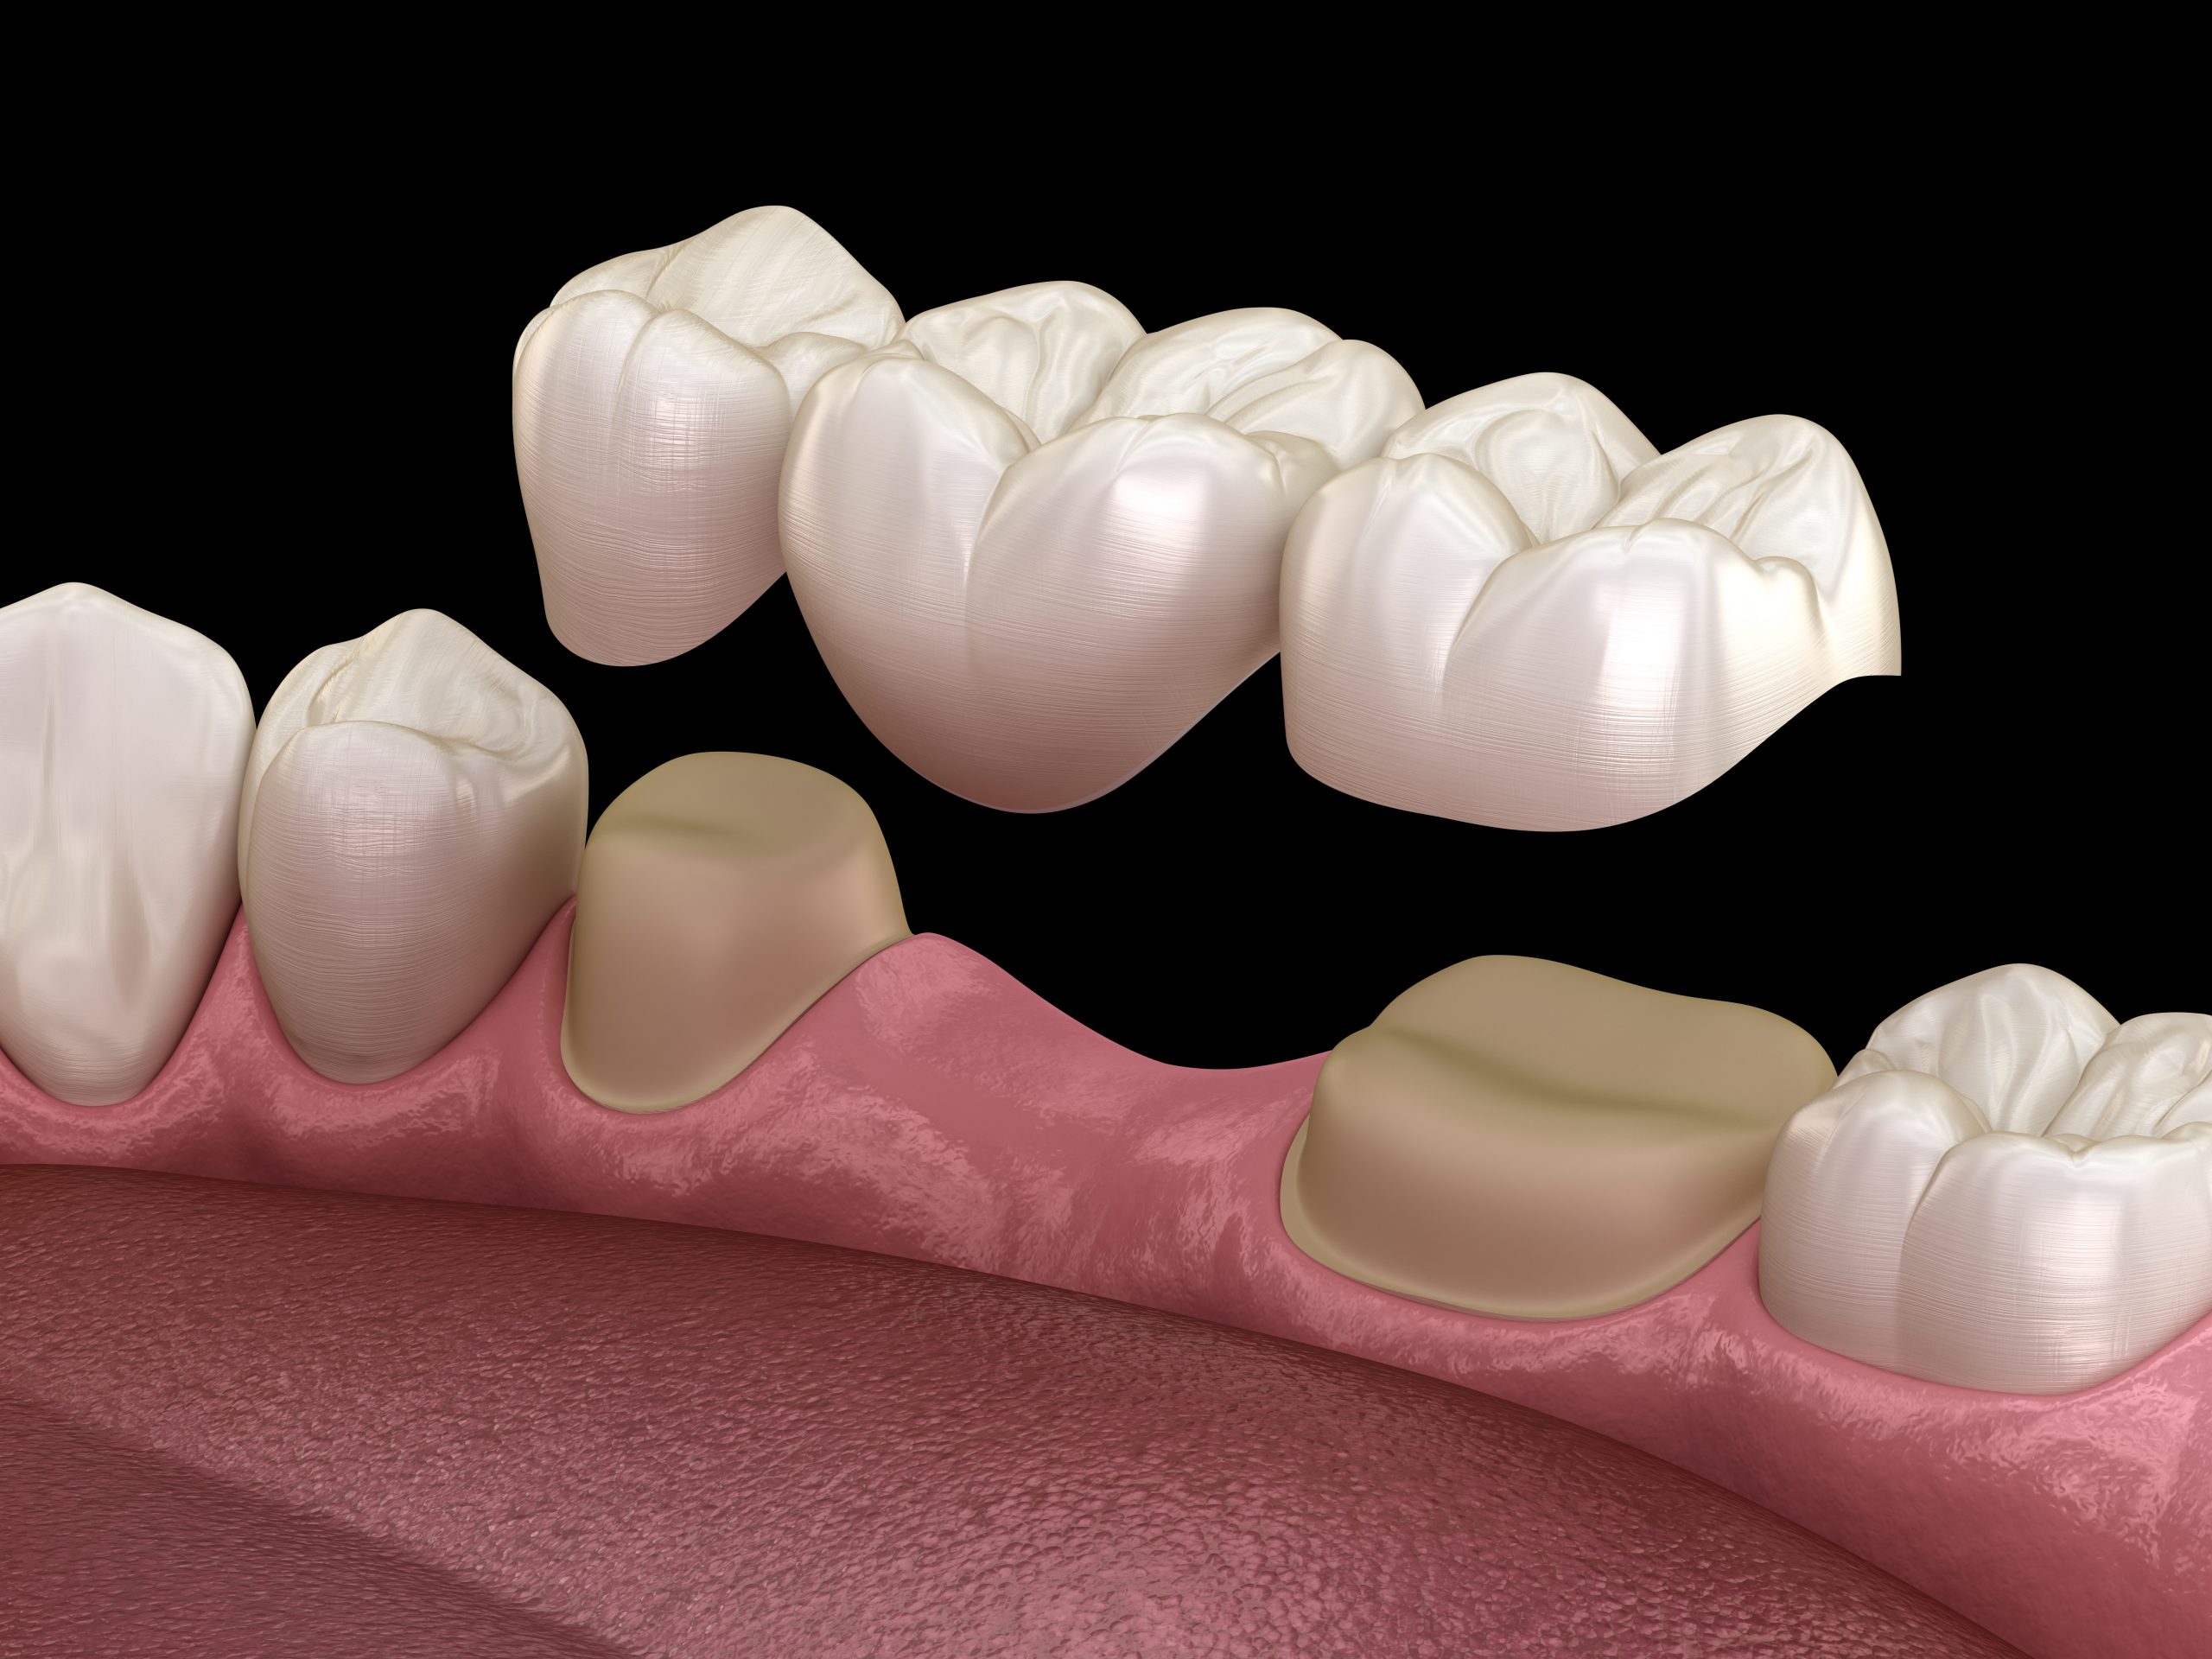 Alternatives to dental bridges